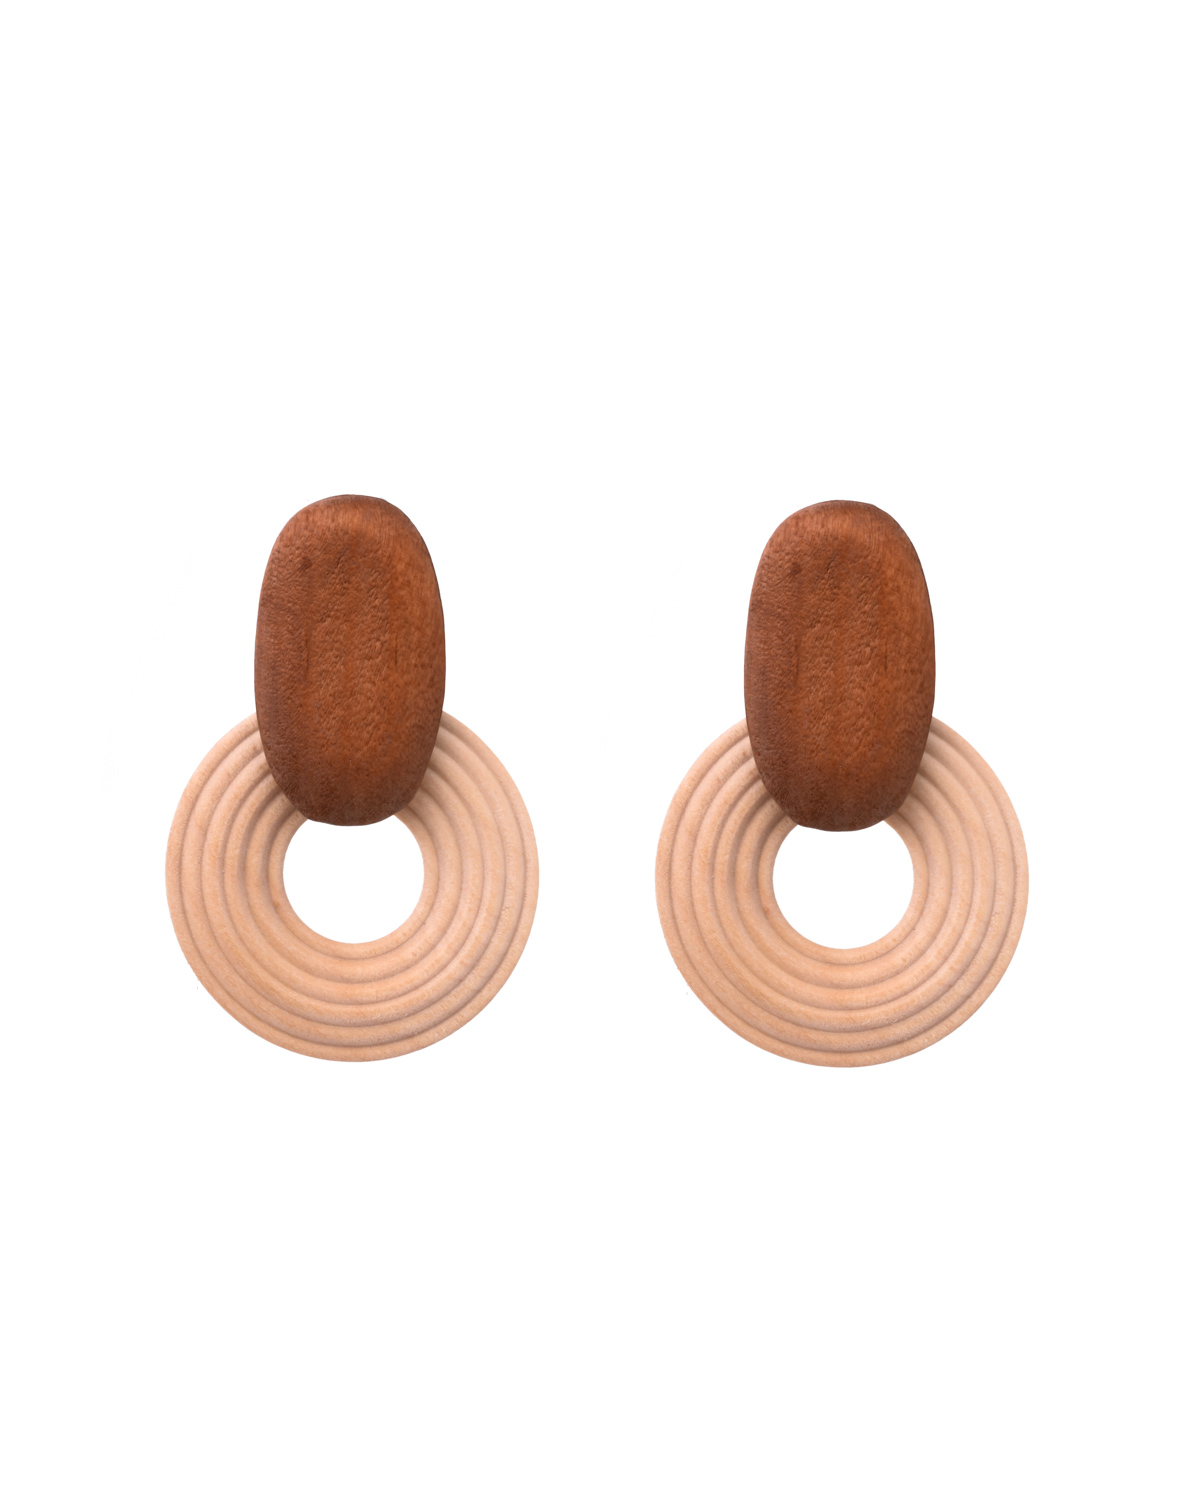 Wooden circle earrings